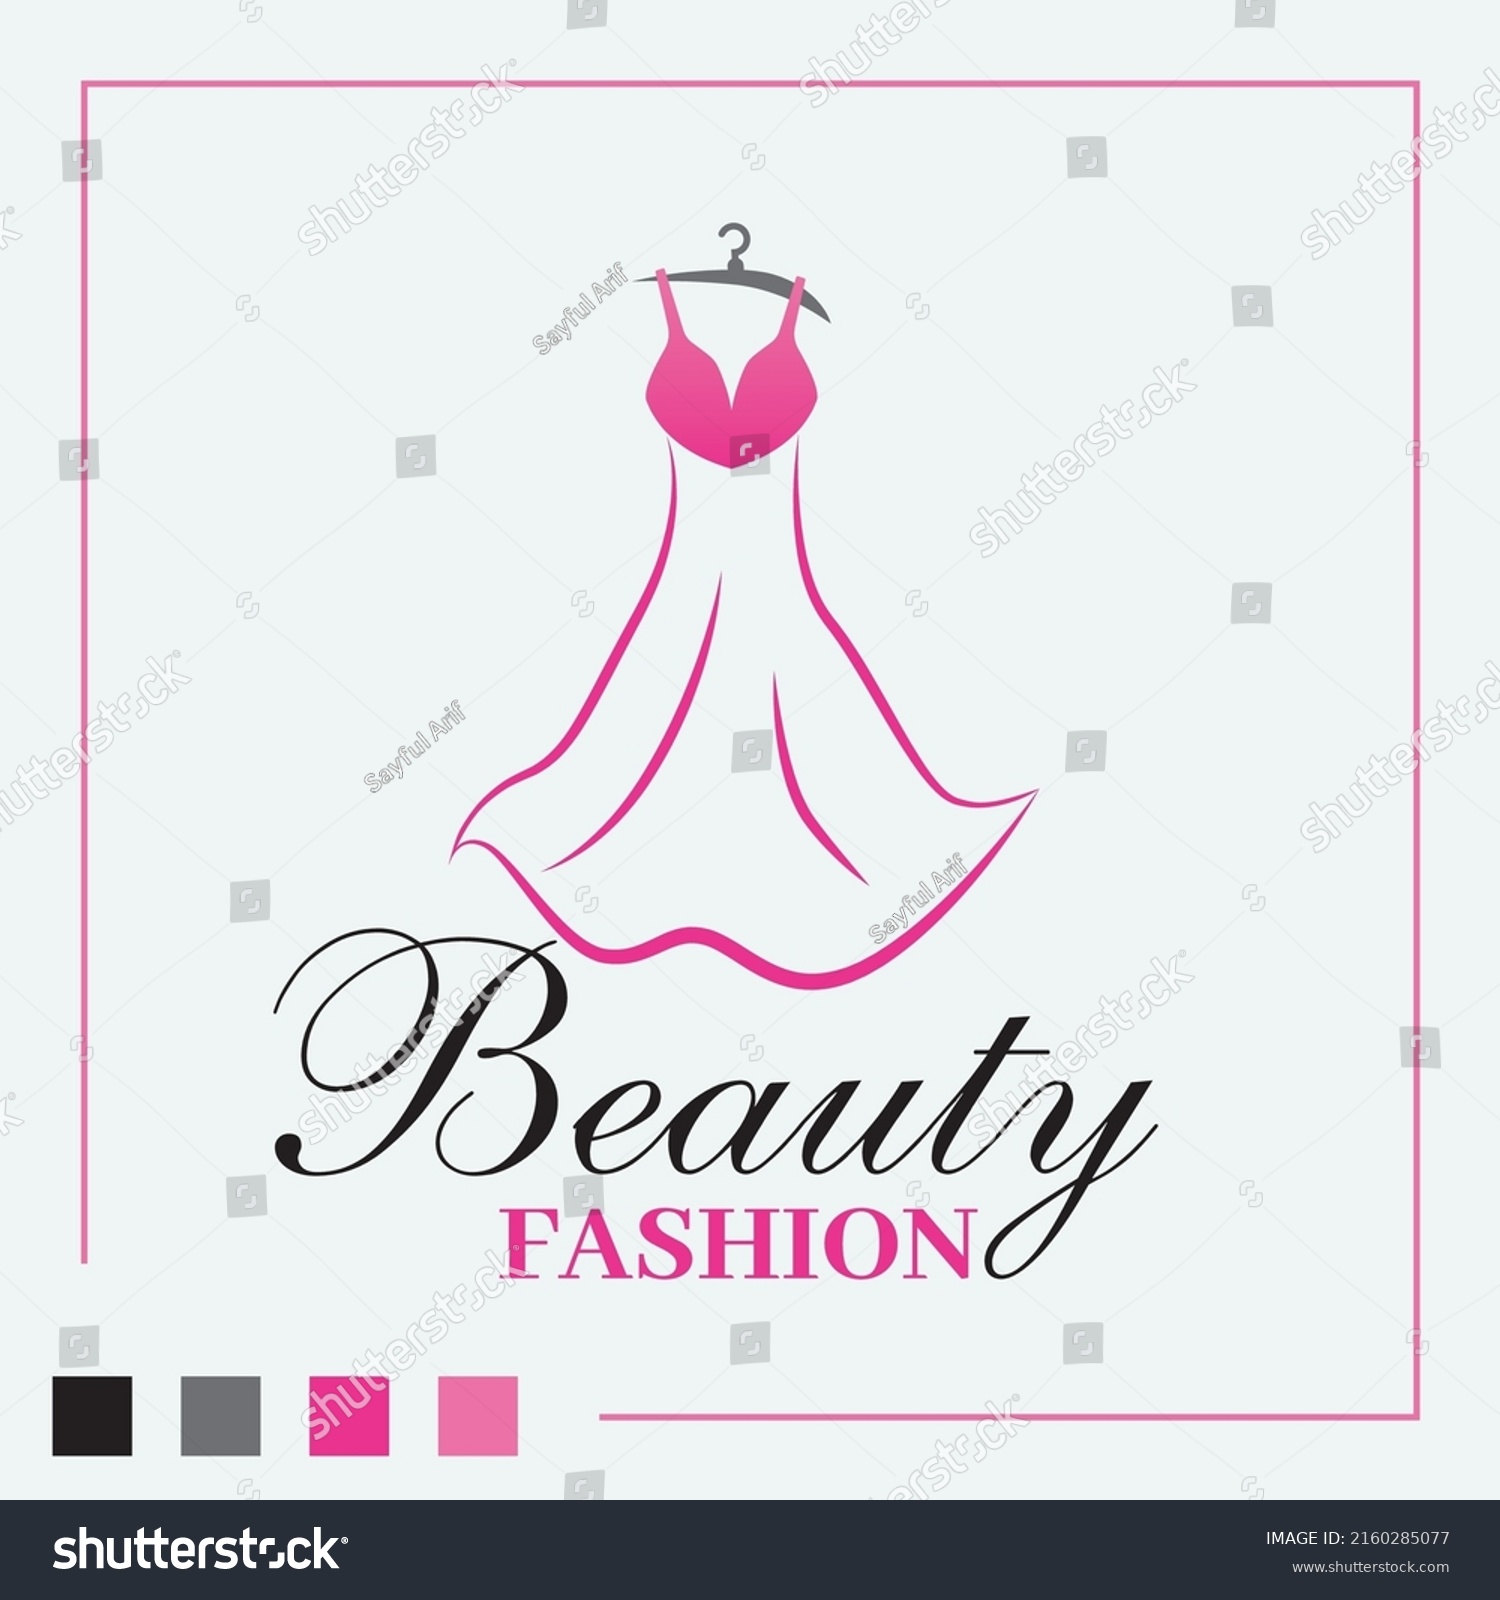 Women Beauty Fashion Logo Desain Template Stock Vector (Royalty Free ...